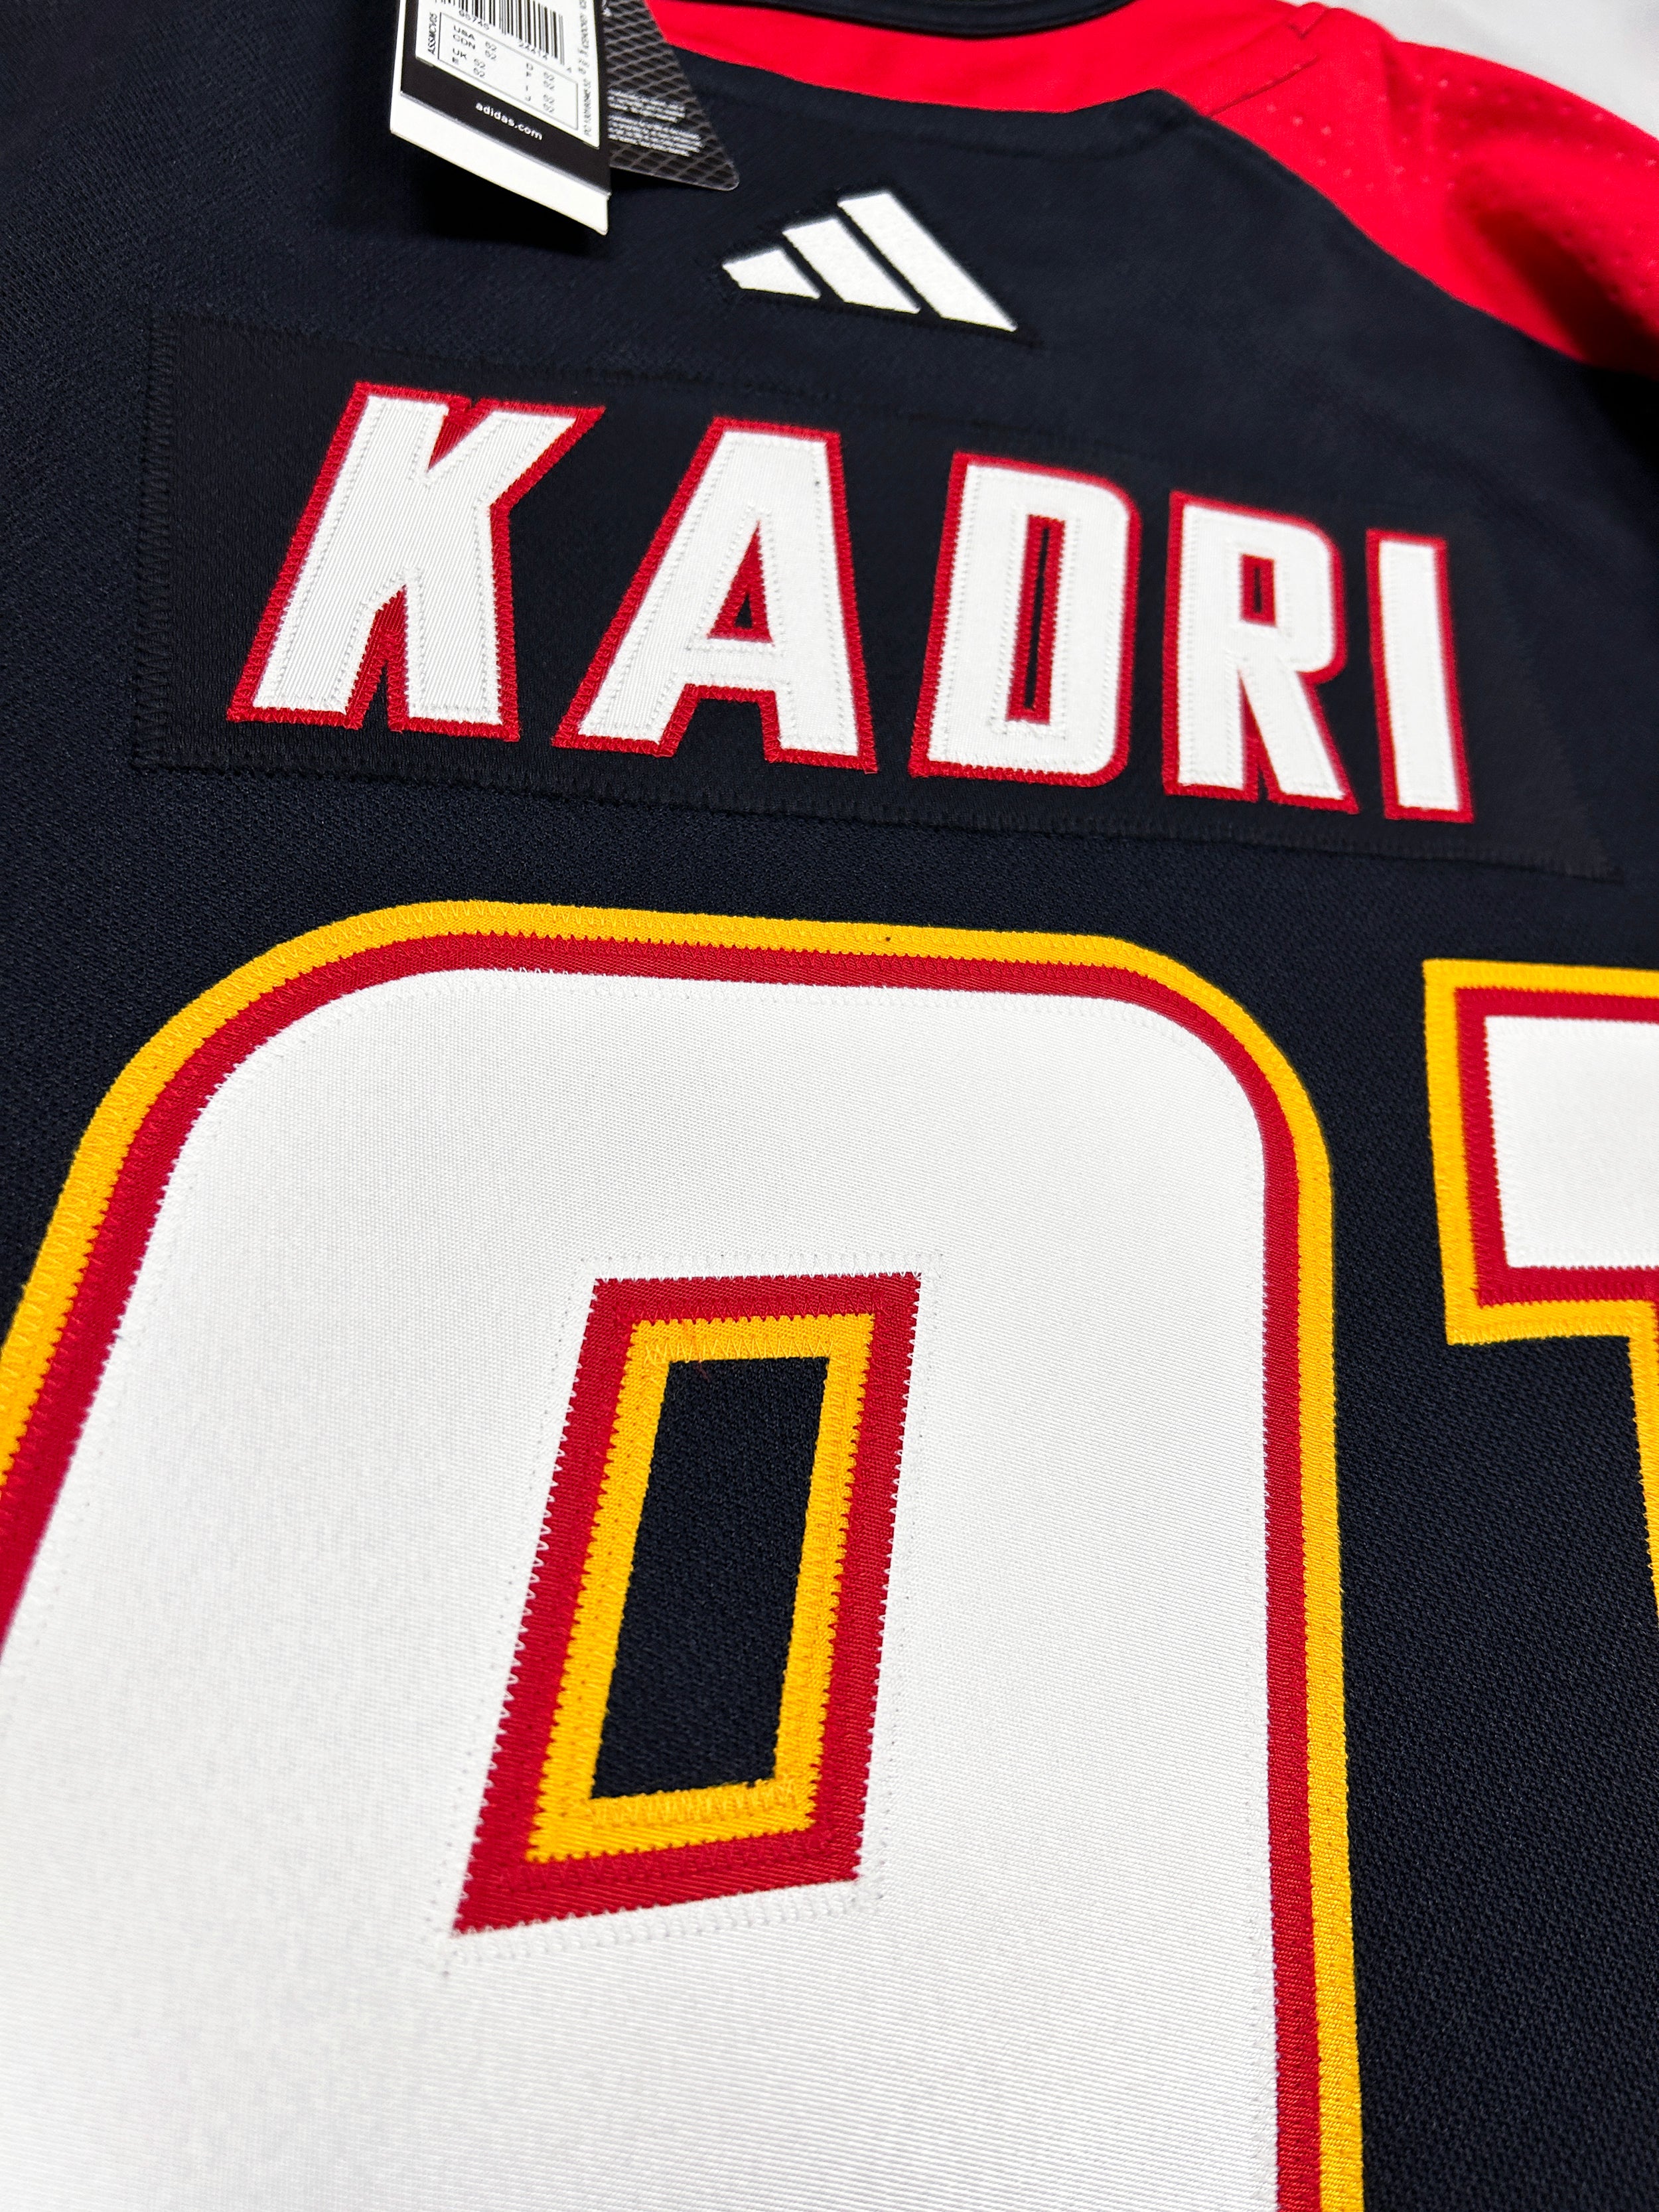 Flames unveil new reverse retro jerseys using team's 1990s design